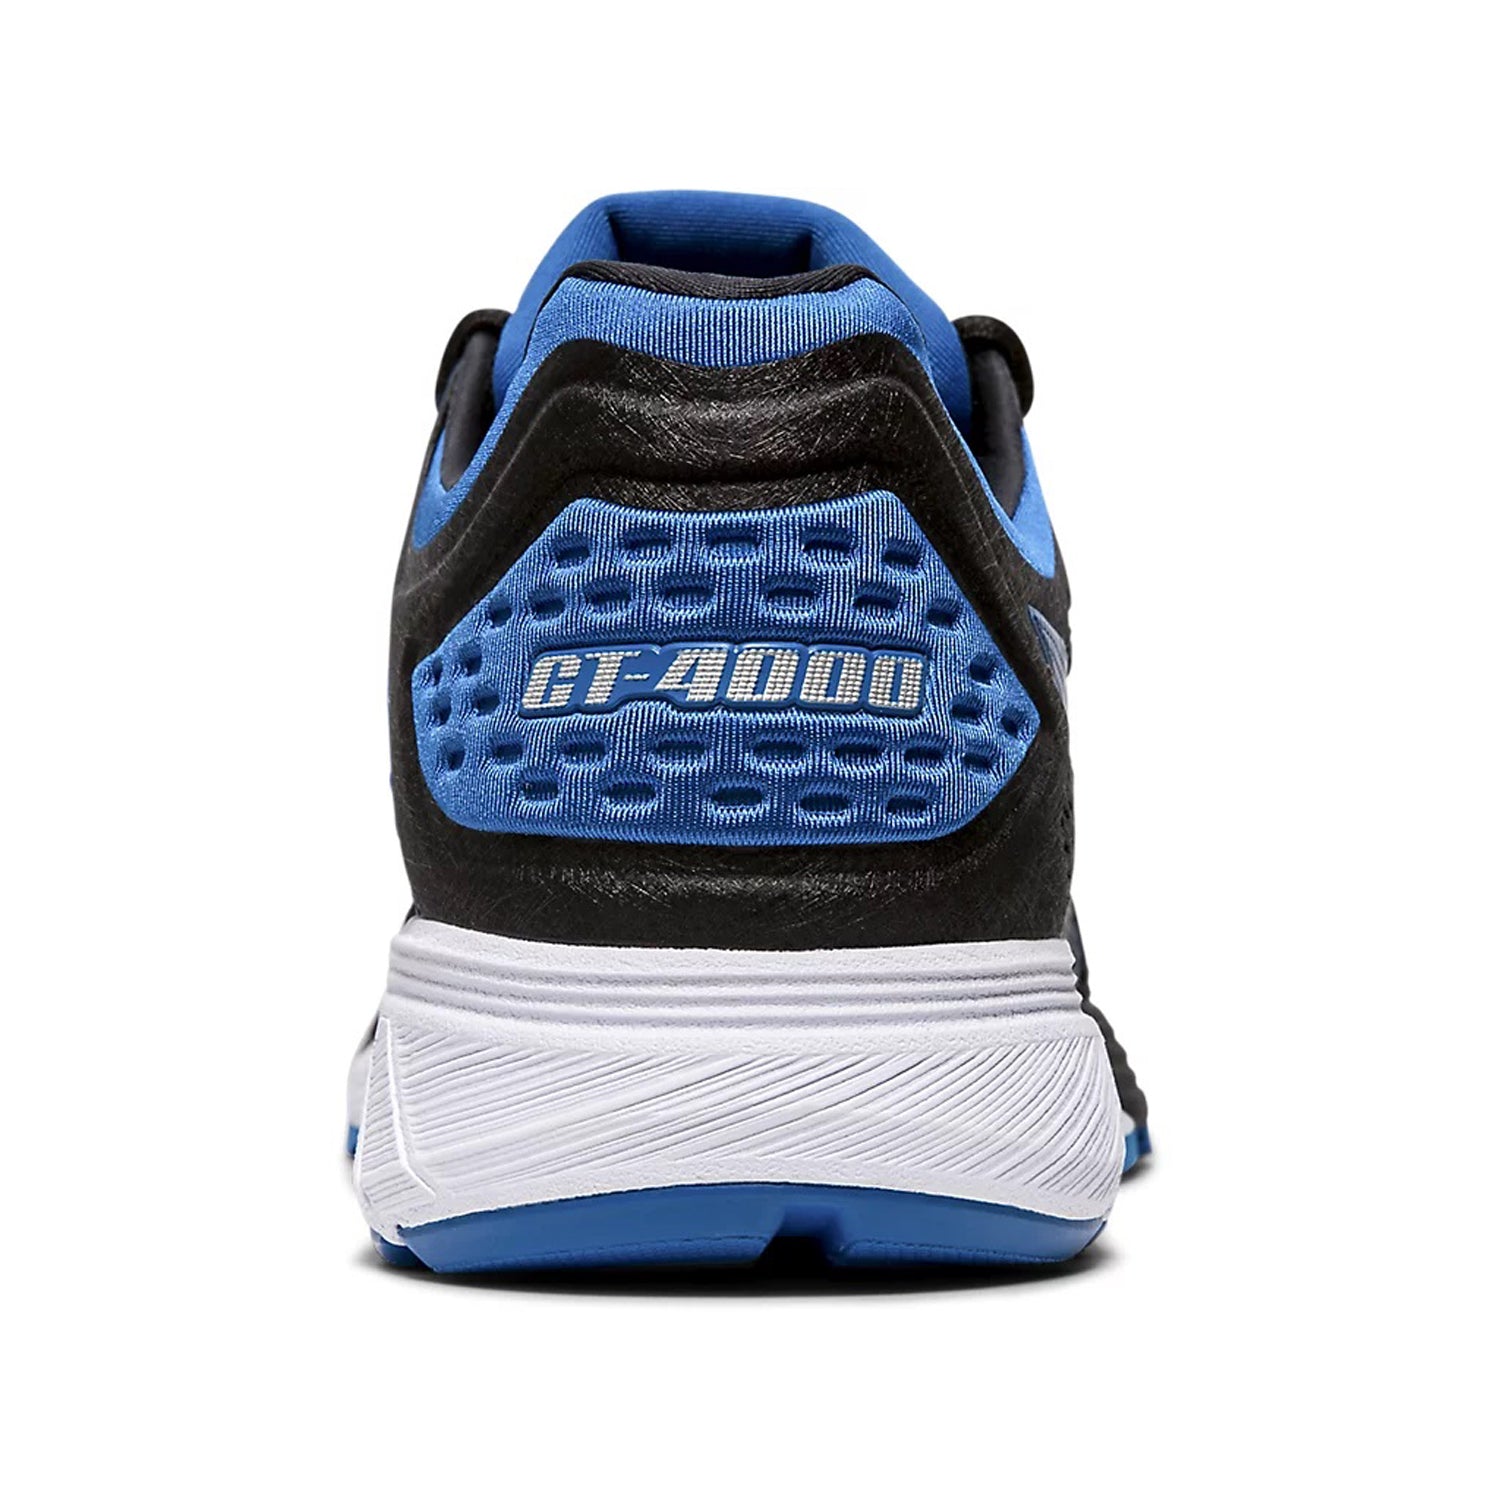 ASICS GT-4000 Men's Running Shoes, Black/Asics Blue - Best Price online Prokicksports.com